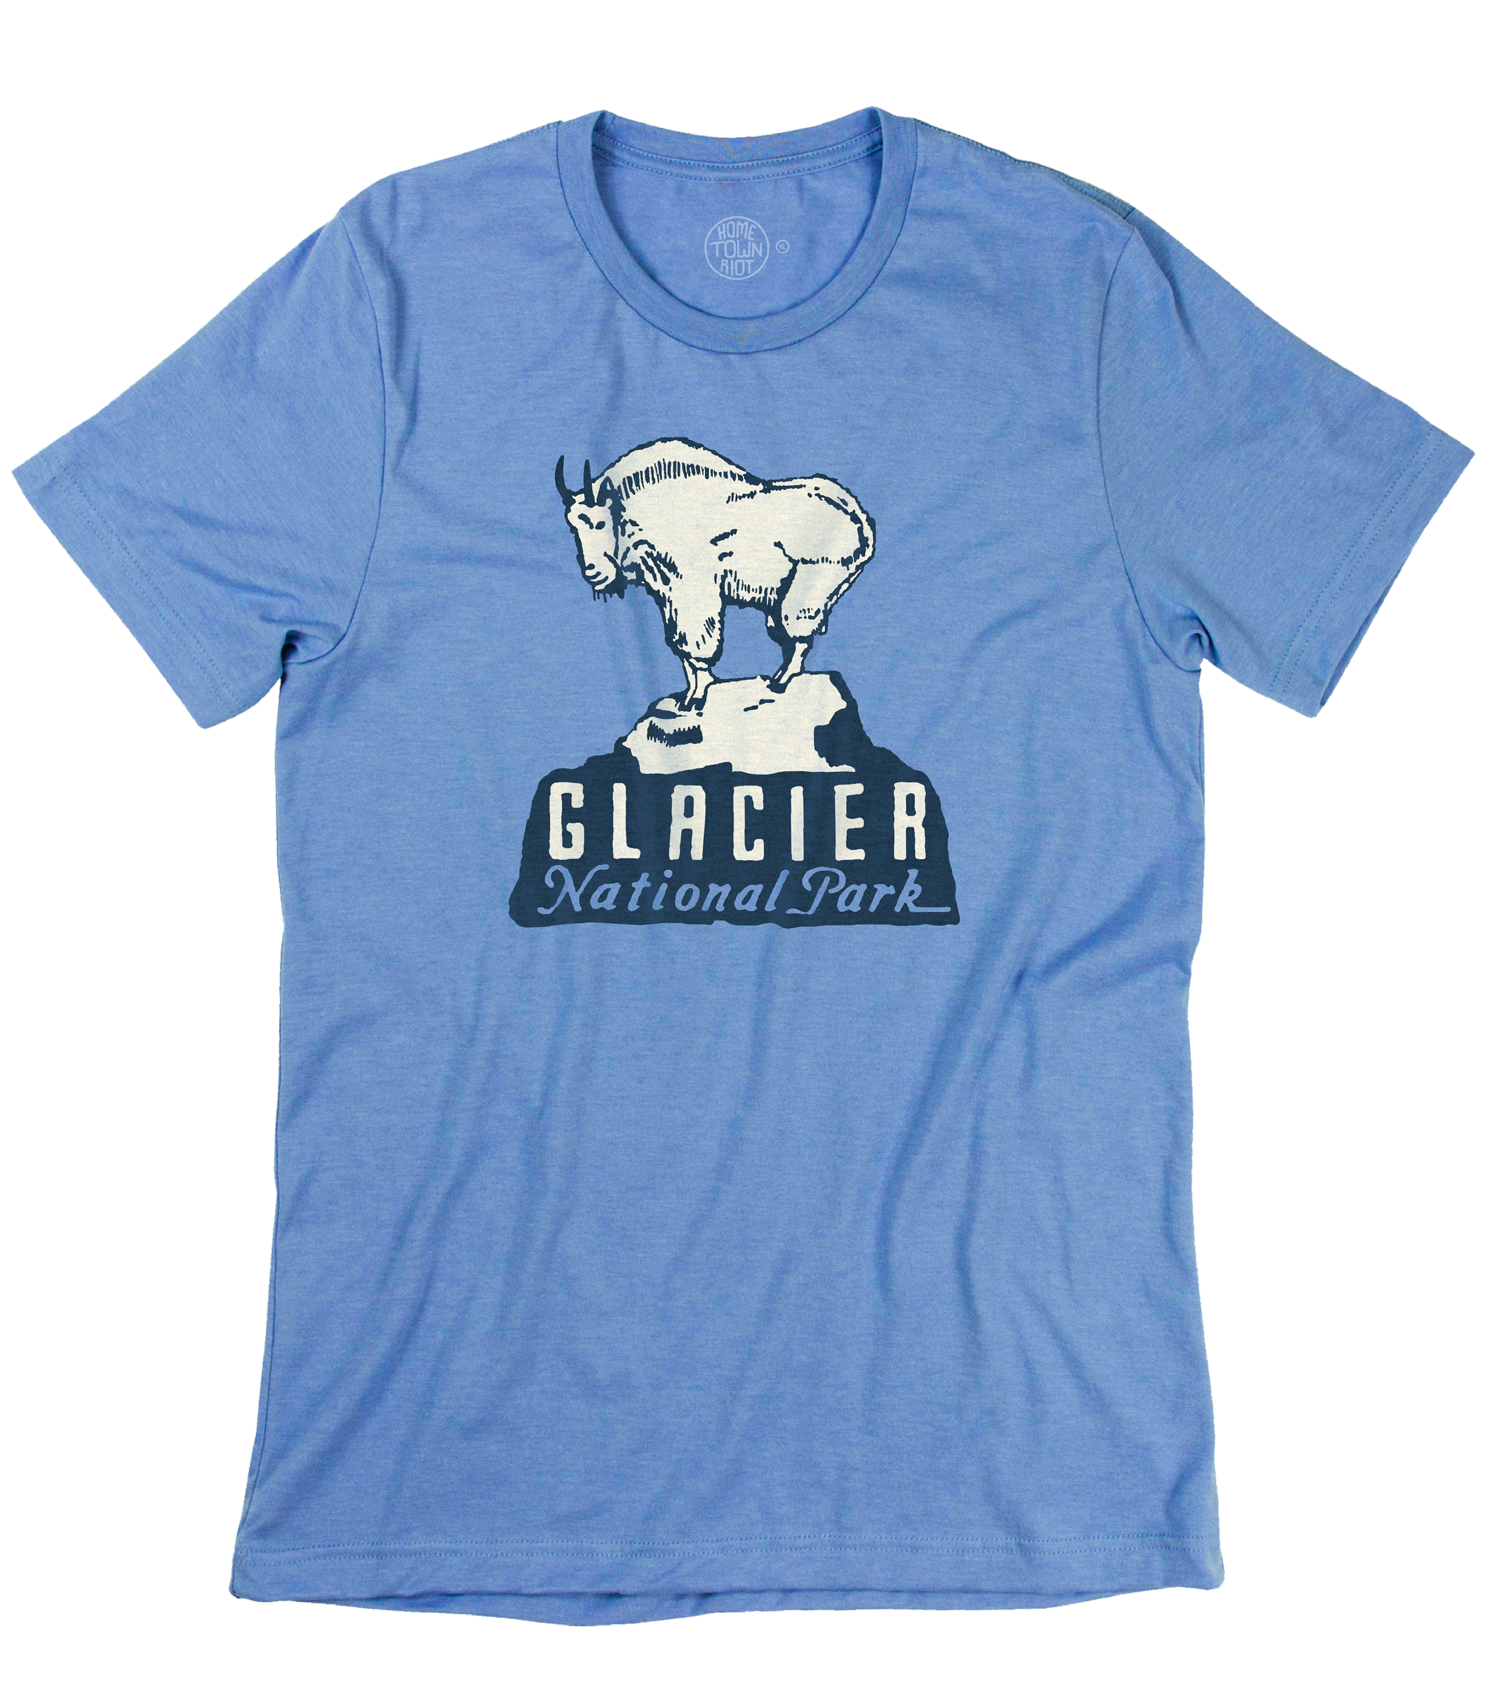 Glacier Mountain Goat Shirt, vintage clothing